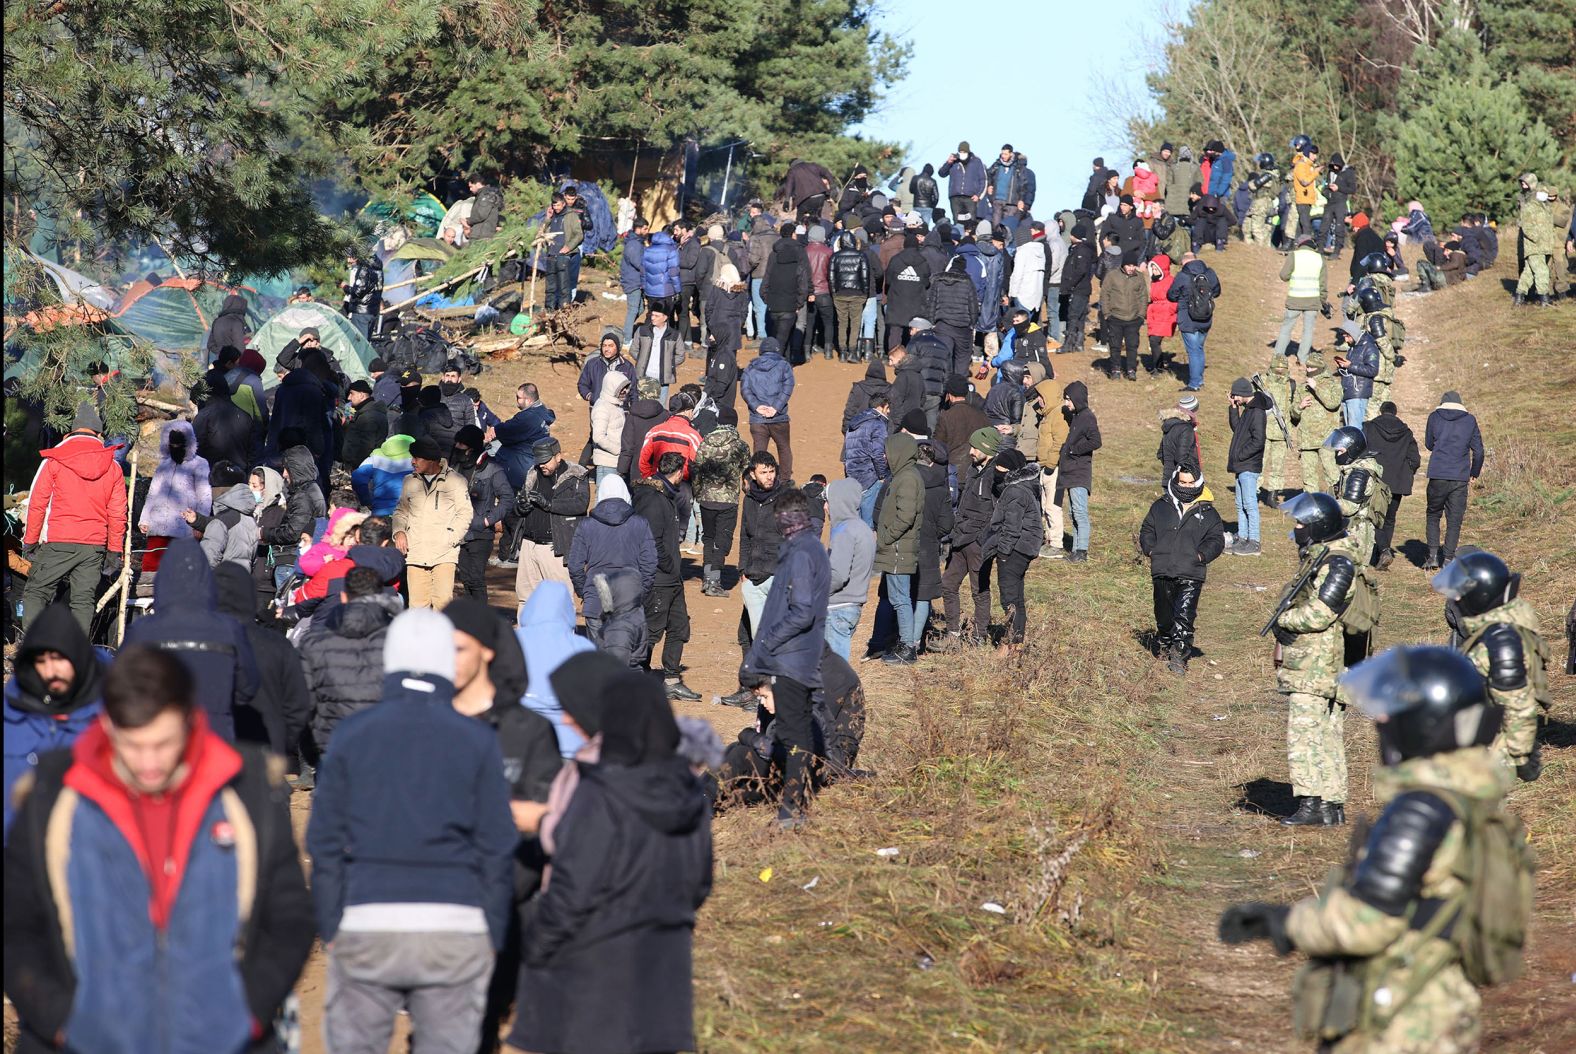 Migrants gather near the border on Monday, November 8.